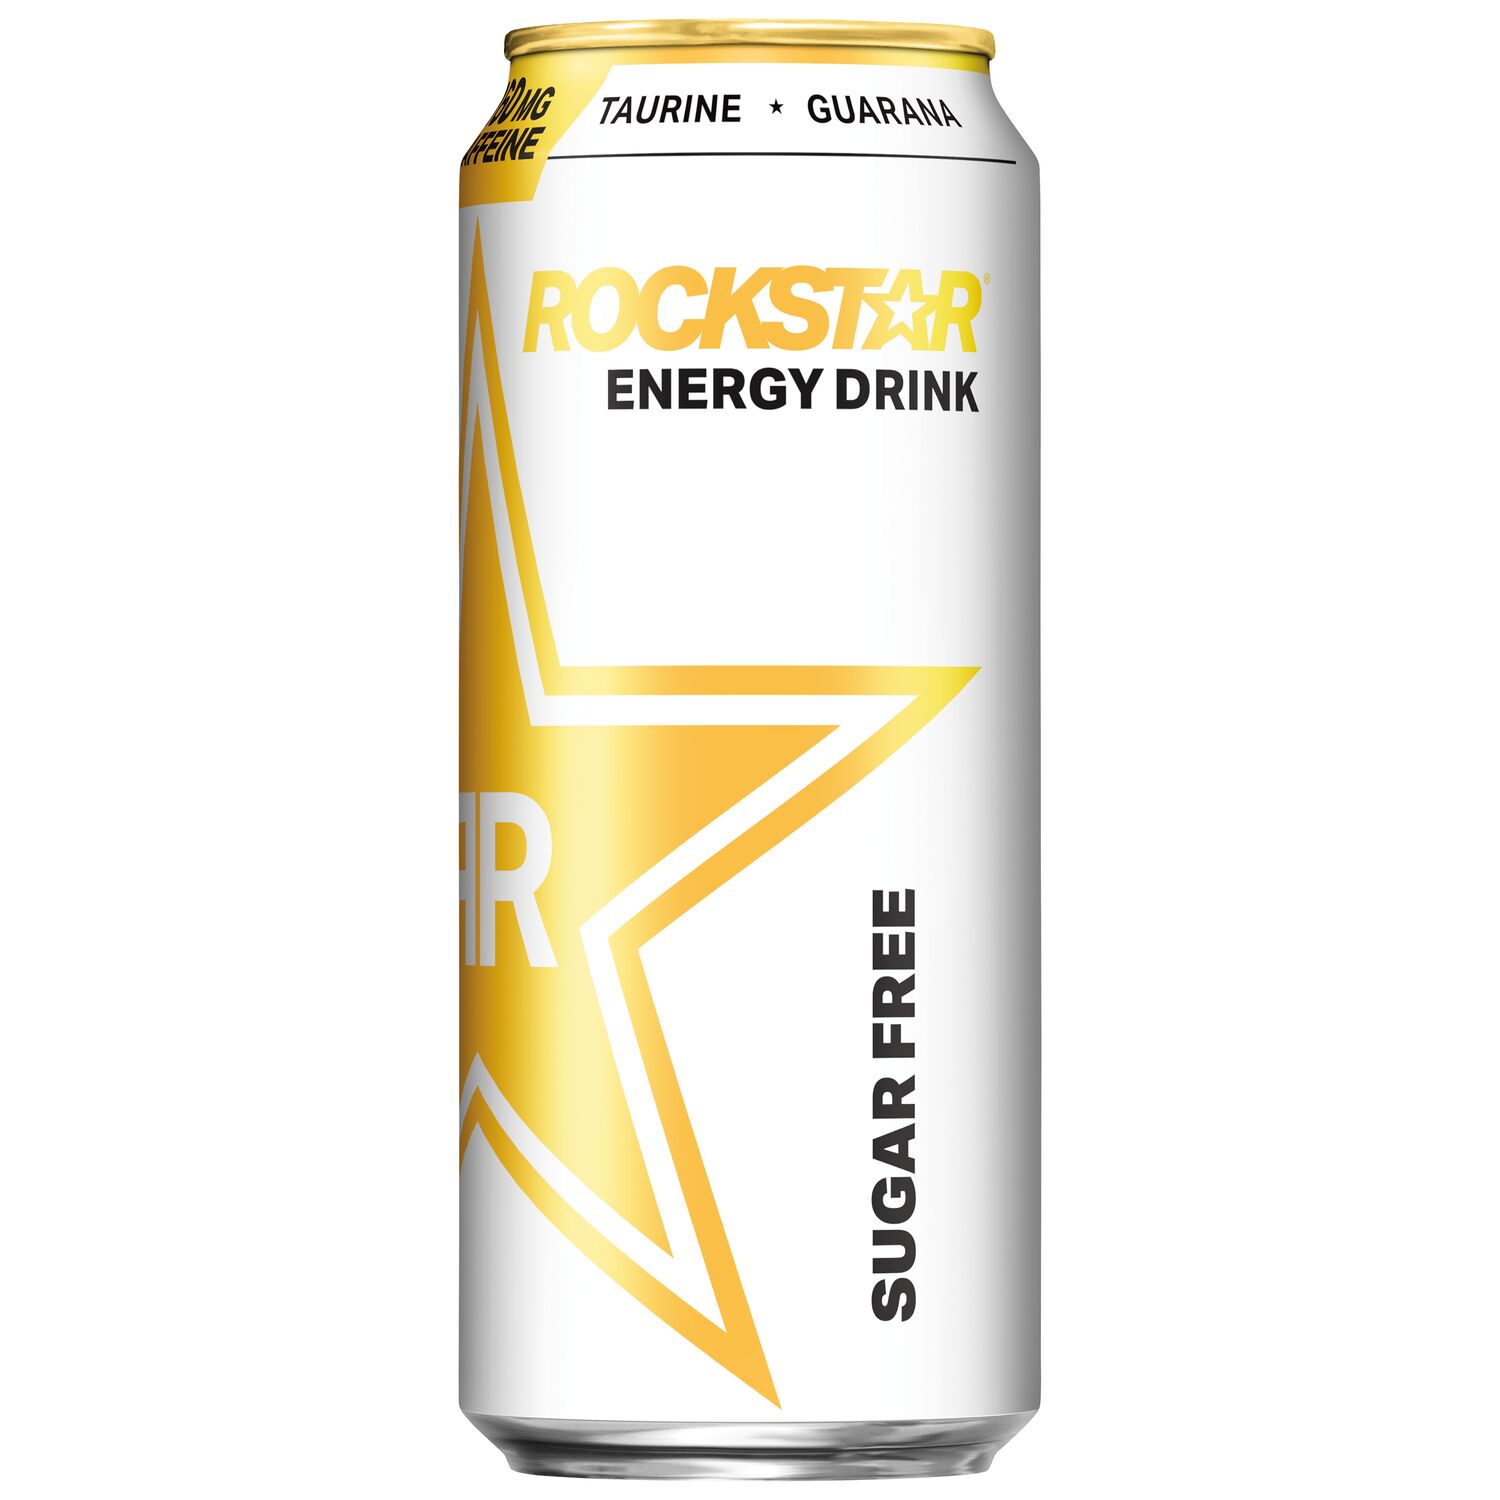  Rockstar Energy Drink, Original, 16oz Cans (24 Pack